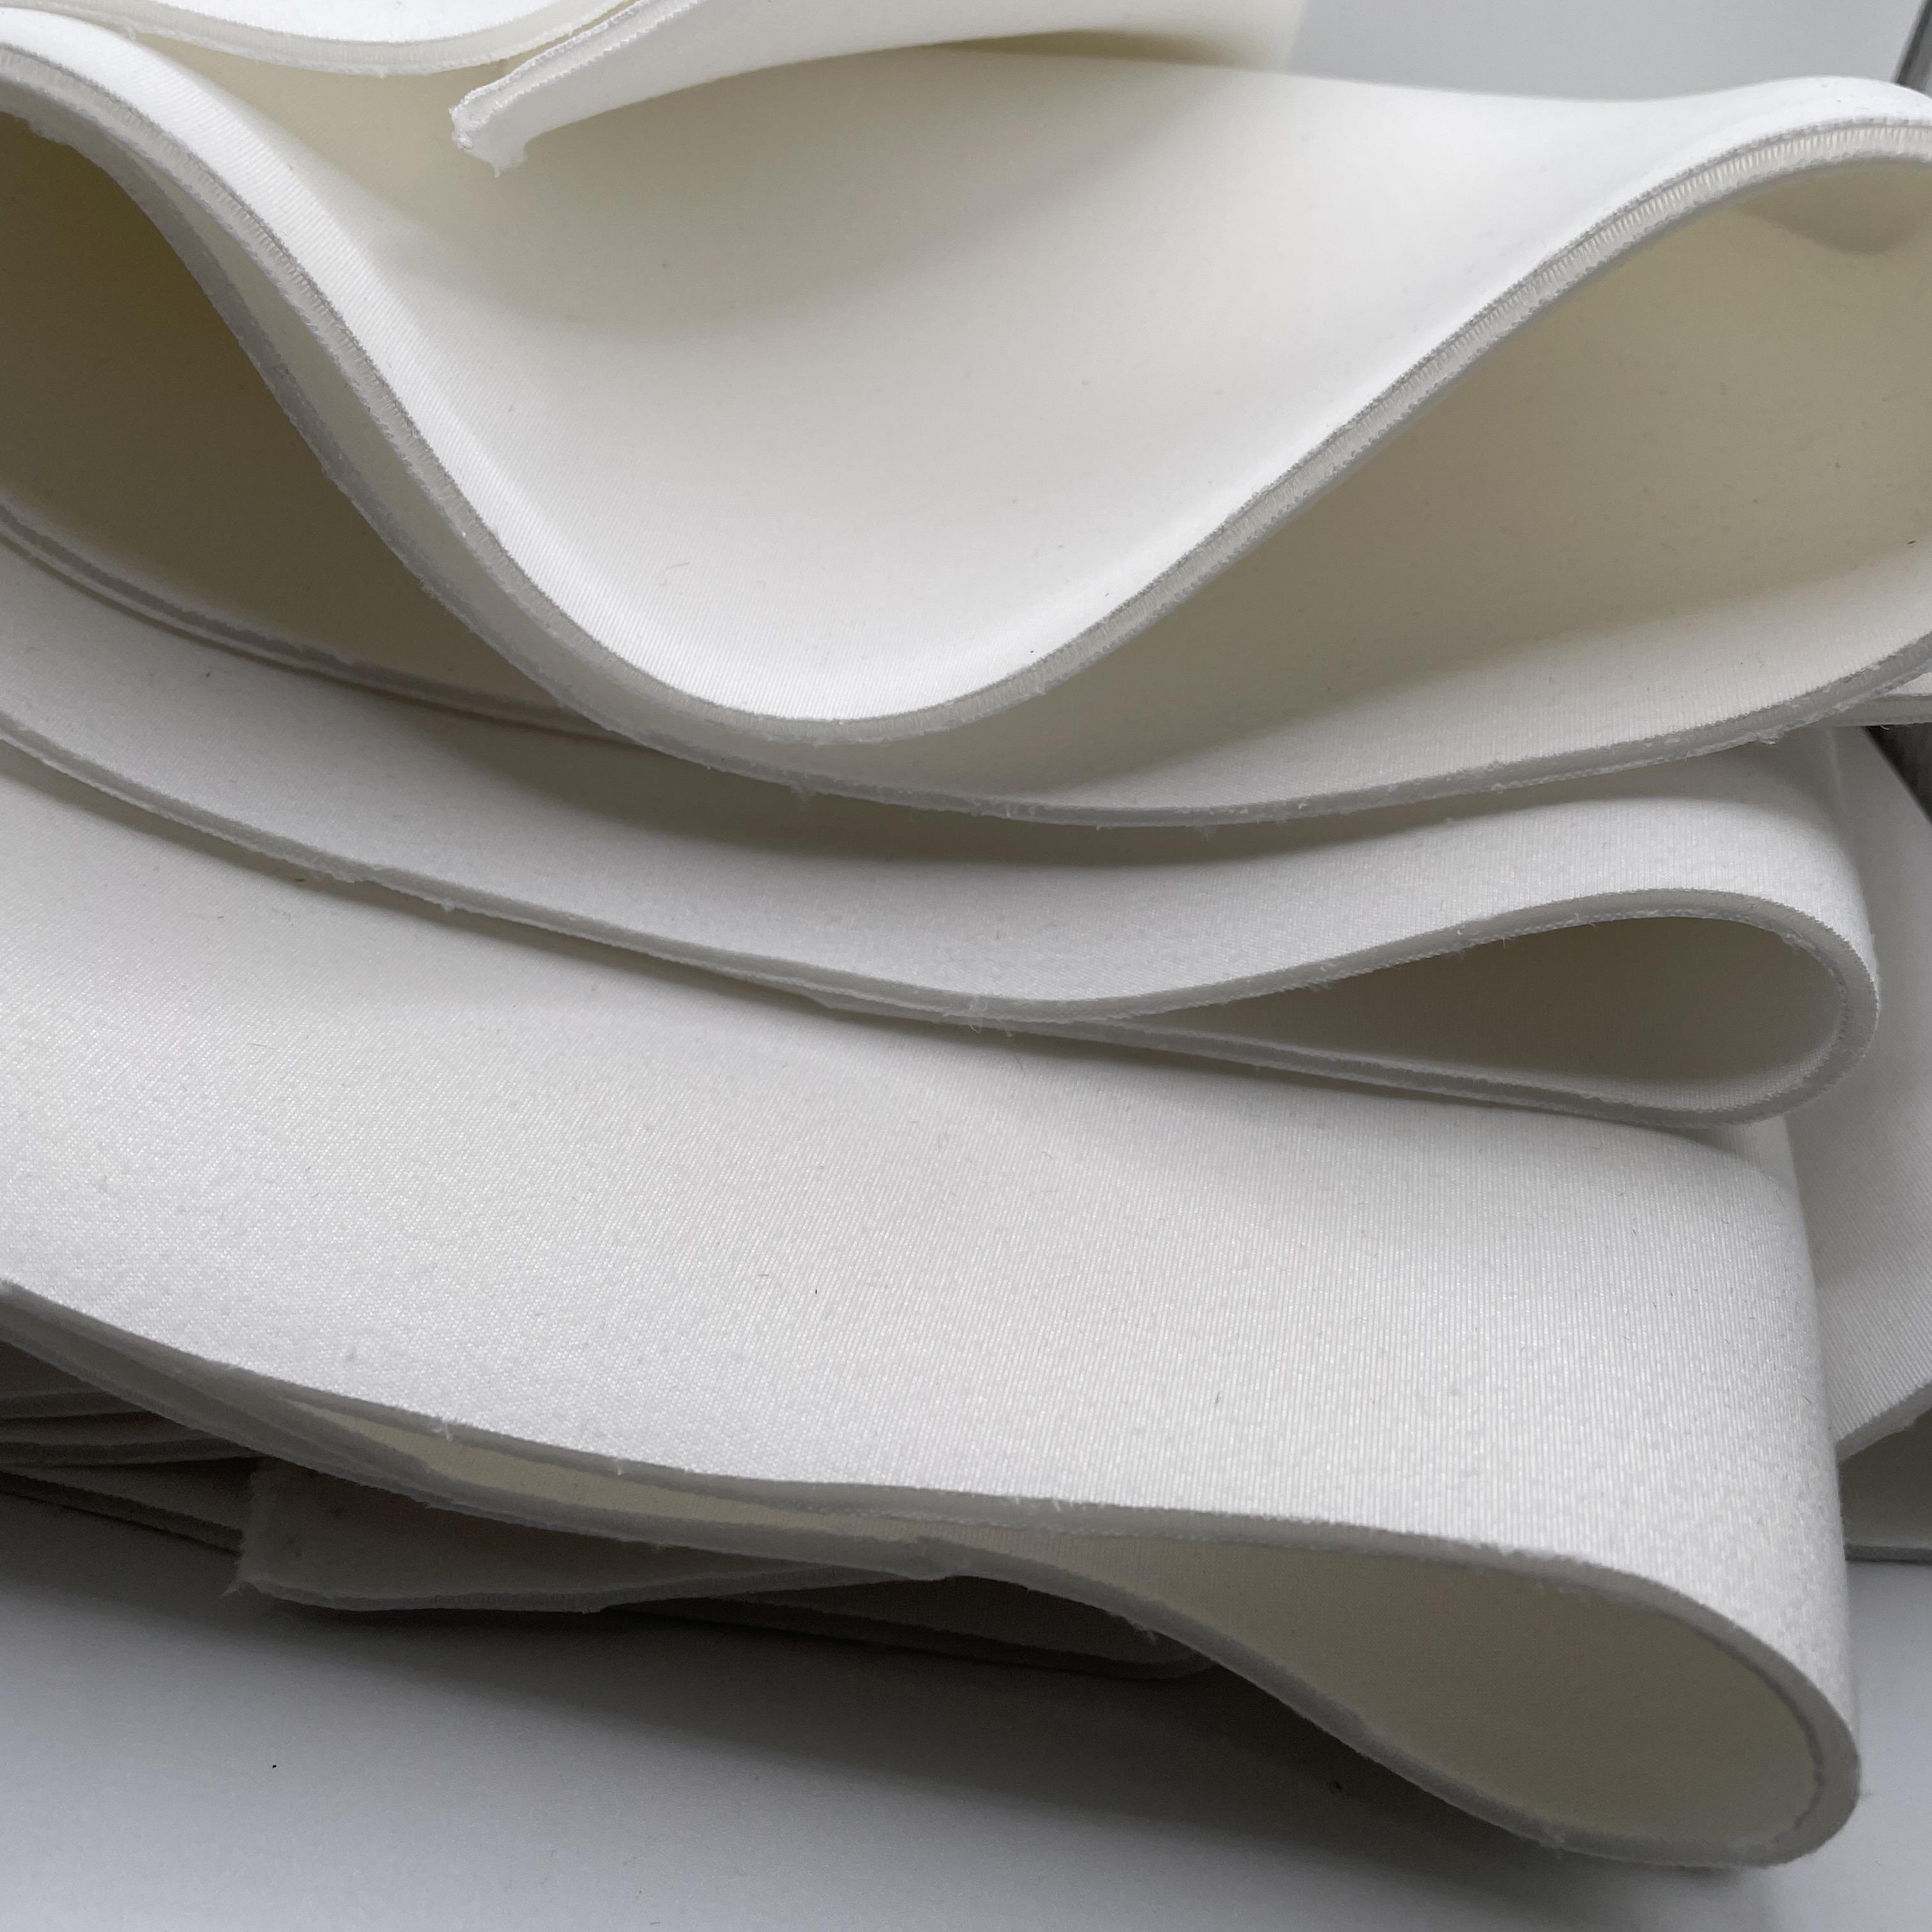 Bra Foam Padding Fabric - IVORY (Light Cream) - 3mm - Cut & Sew - Smooth  Faced - 70cm x 45cm, per piece